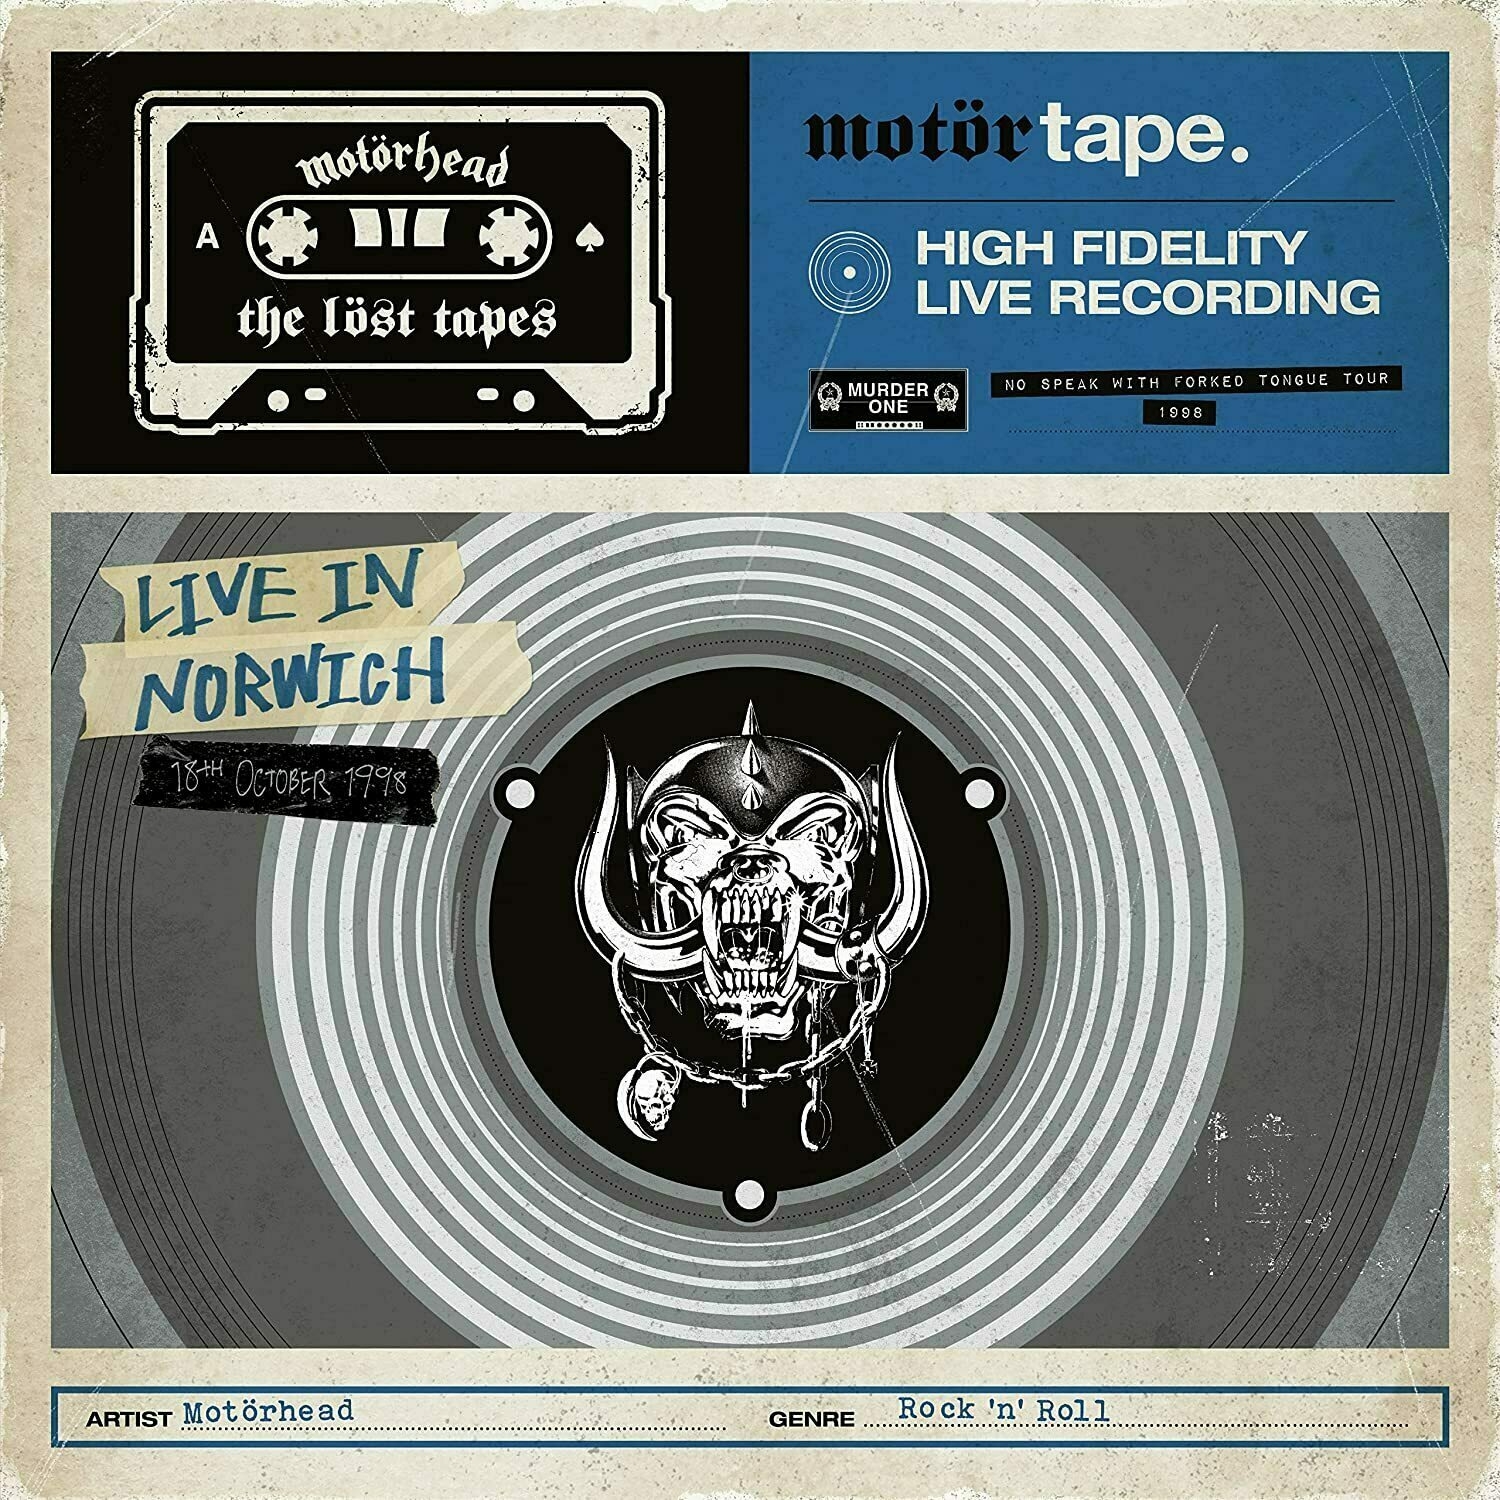 Виниловая Пластинка Motorhead The Lost Tapes Vol. 2 (Live In Norwich 1998) (4050538707762) виниловая пластинка eu motorhead the lost tapes vol 2 live in norwich 1998 coloured vinyl 2lp